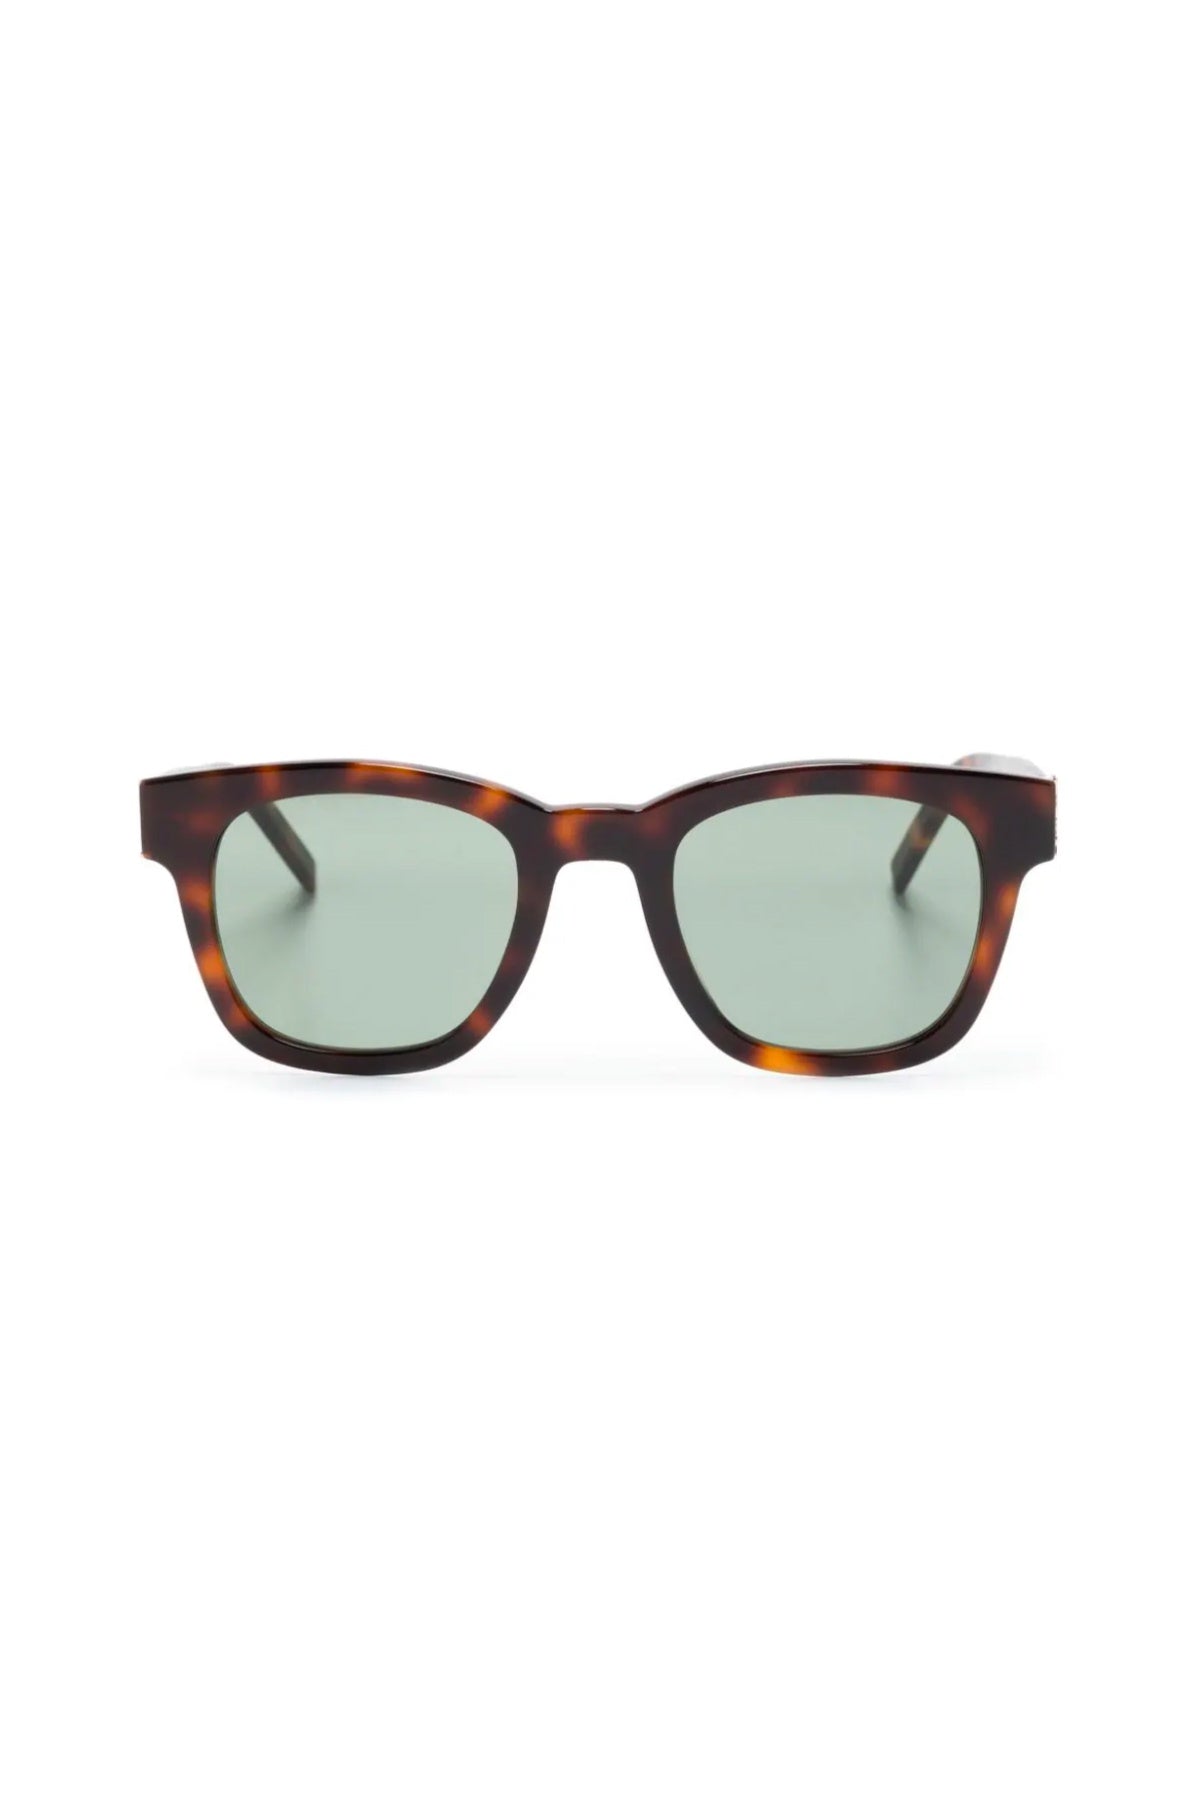 Saint Laurent Square Framed Sunglasses - Havana